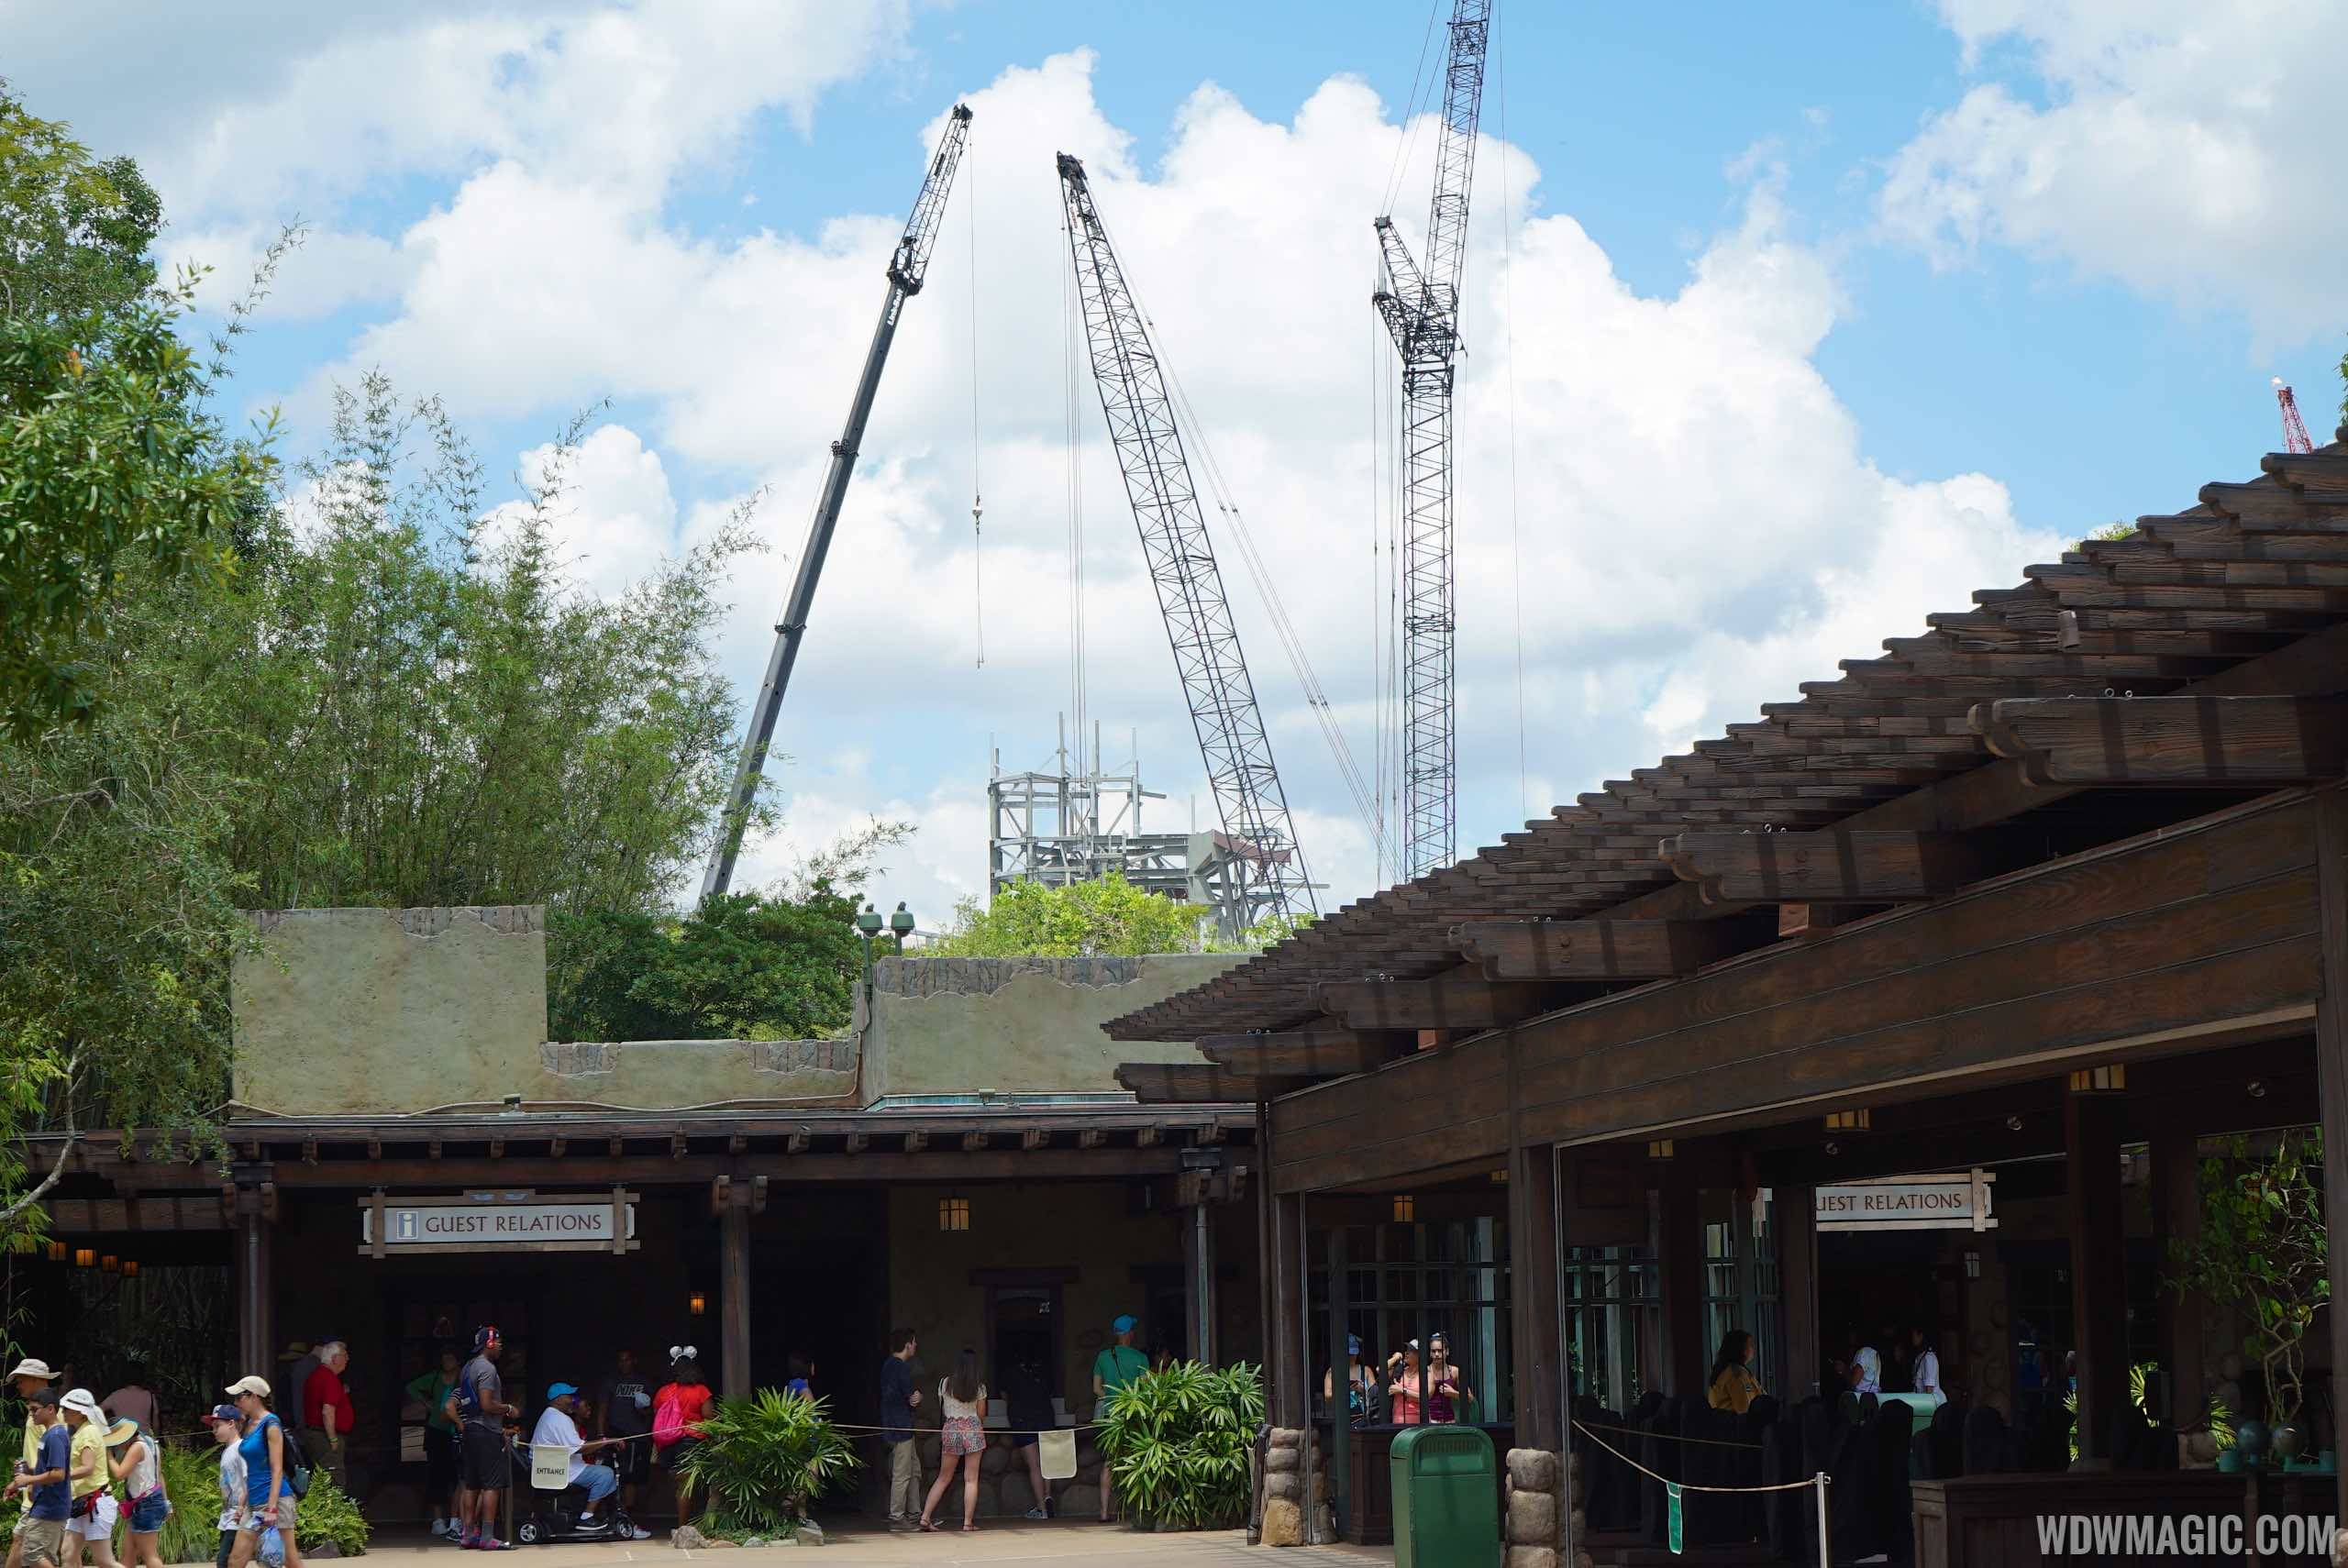 AVATAR construction visible from the main entrance at Disney's Animal Kingdom